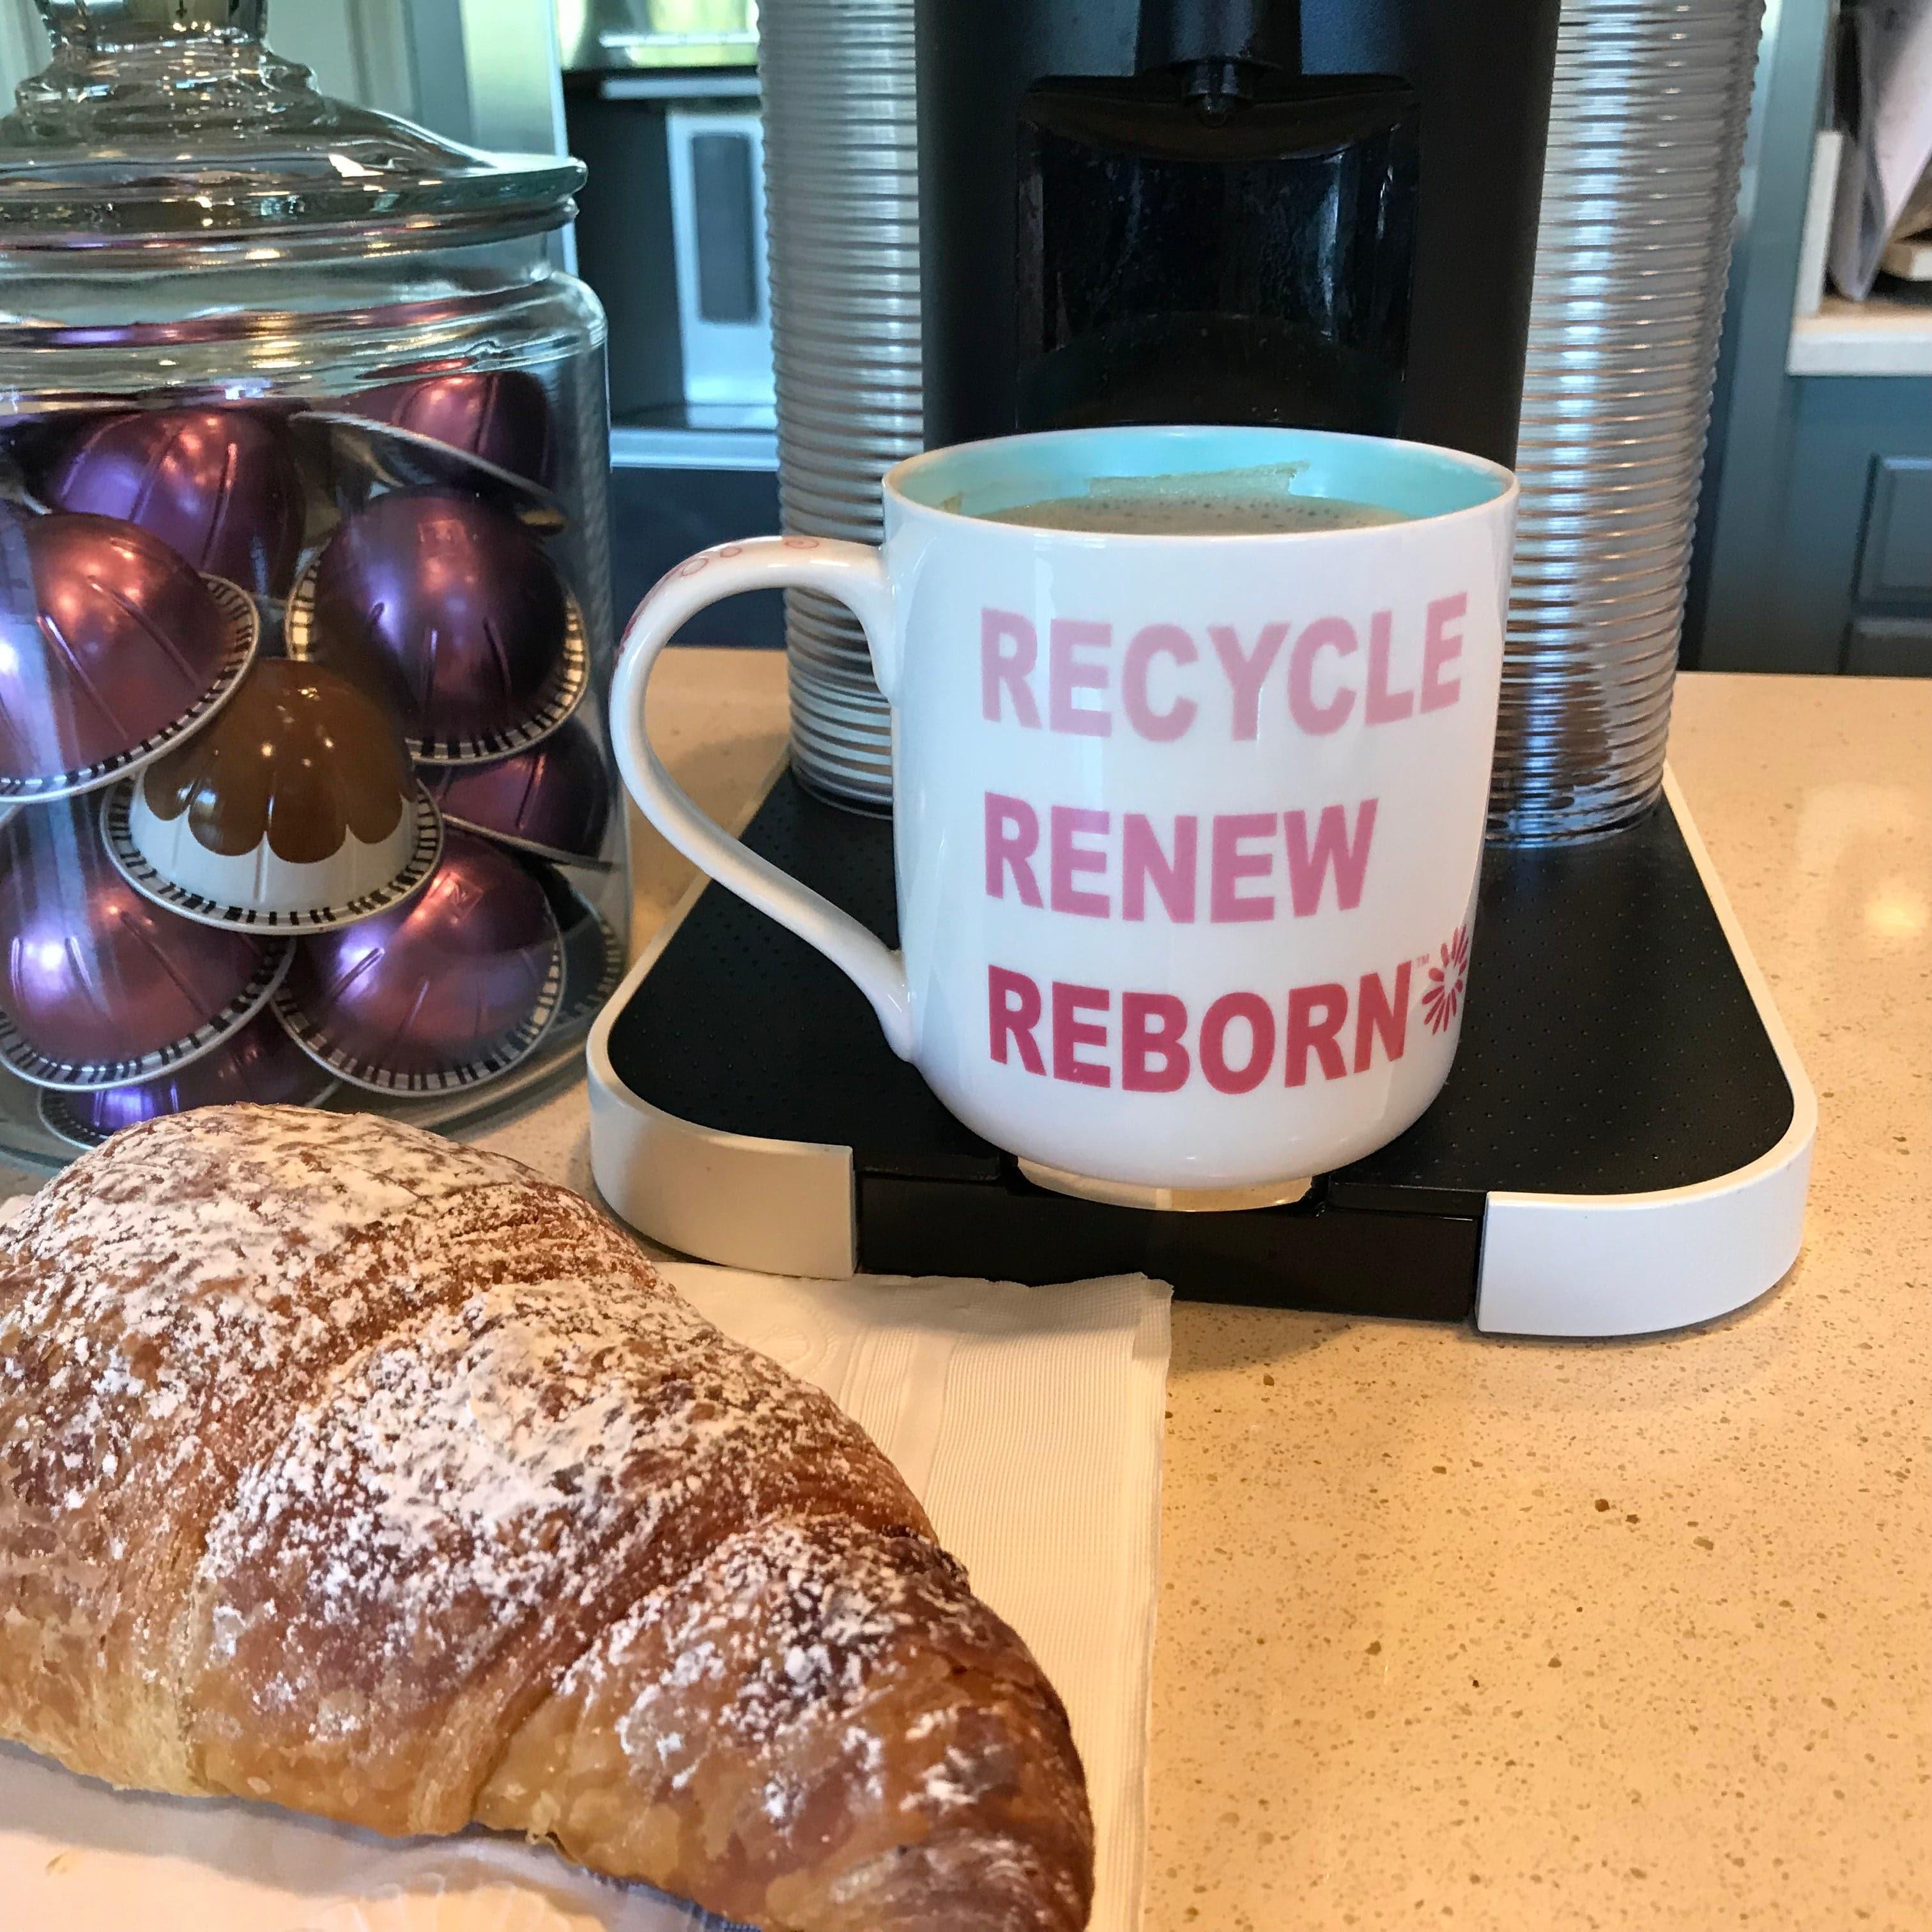 Reborn Coffee update 051518